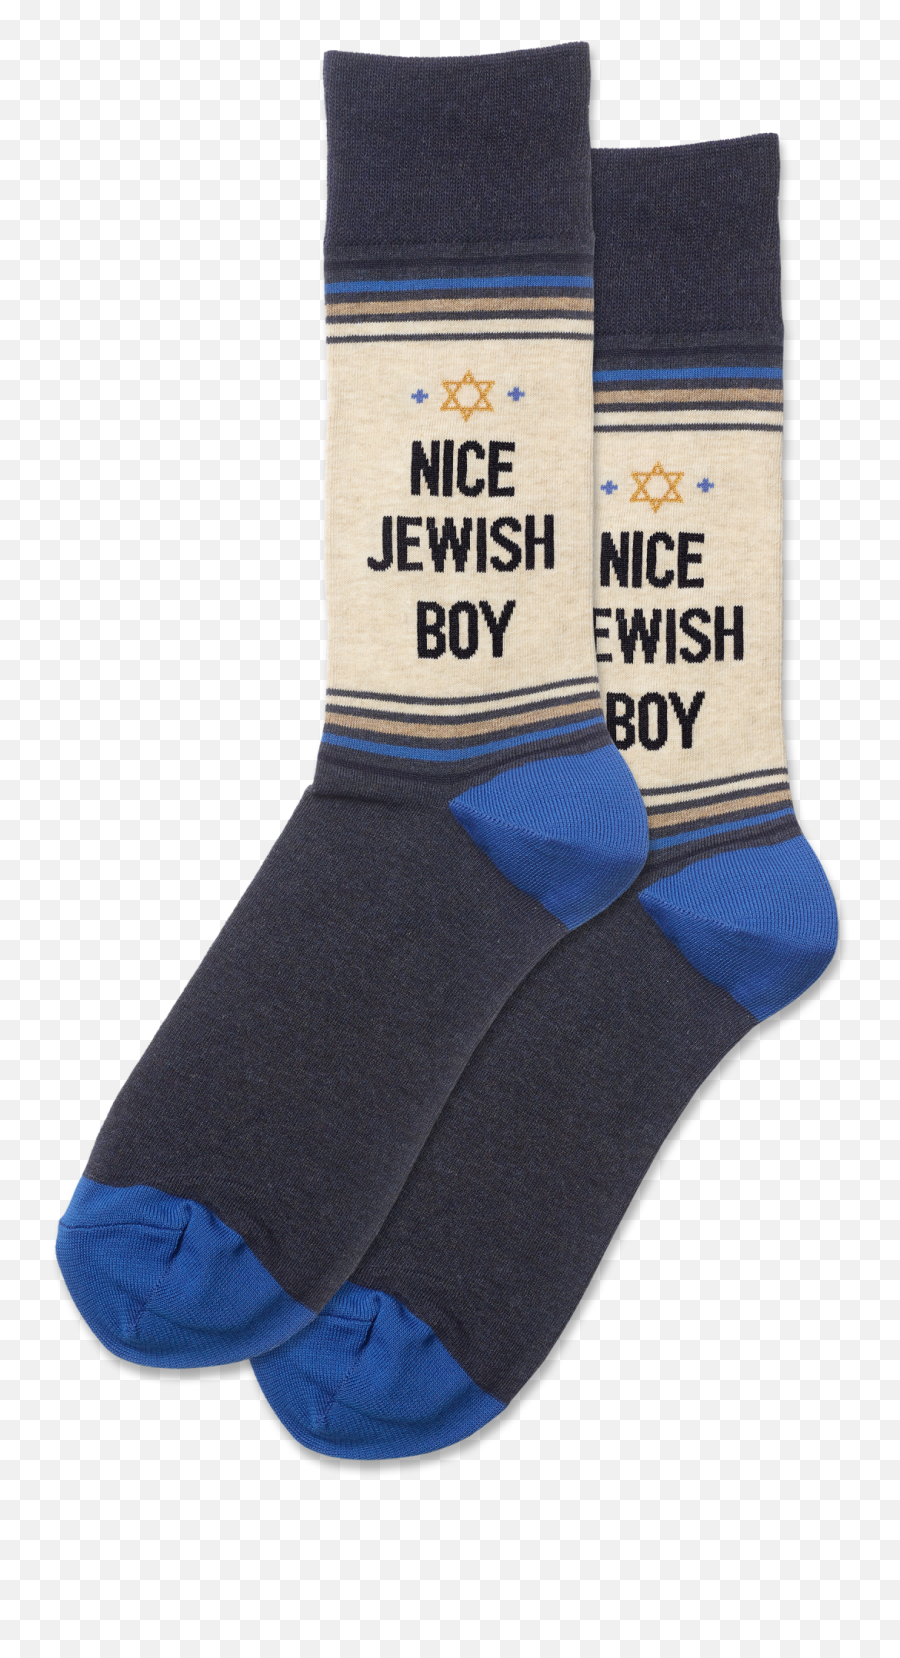 Menu0027s Nice Jewish Boy Crew Socks Emoji,Jeeish Emojis